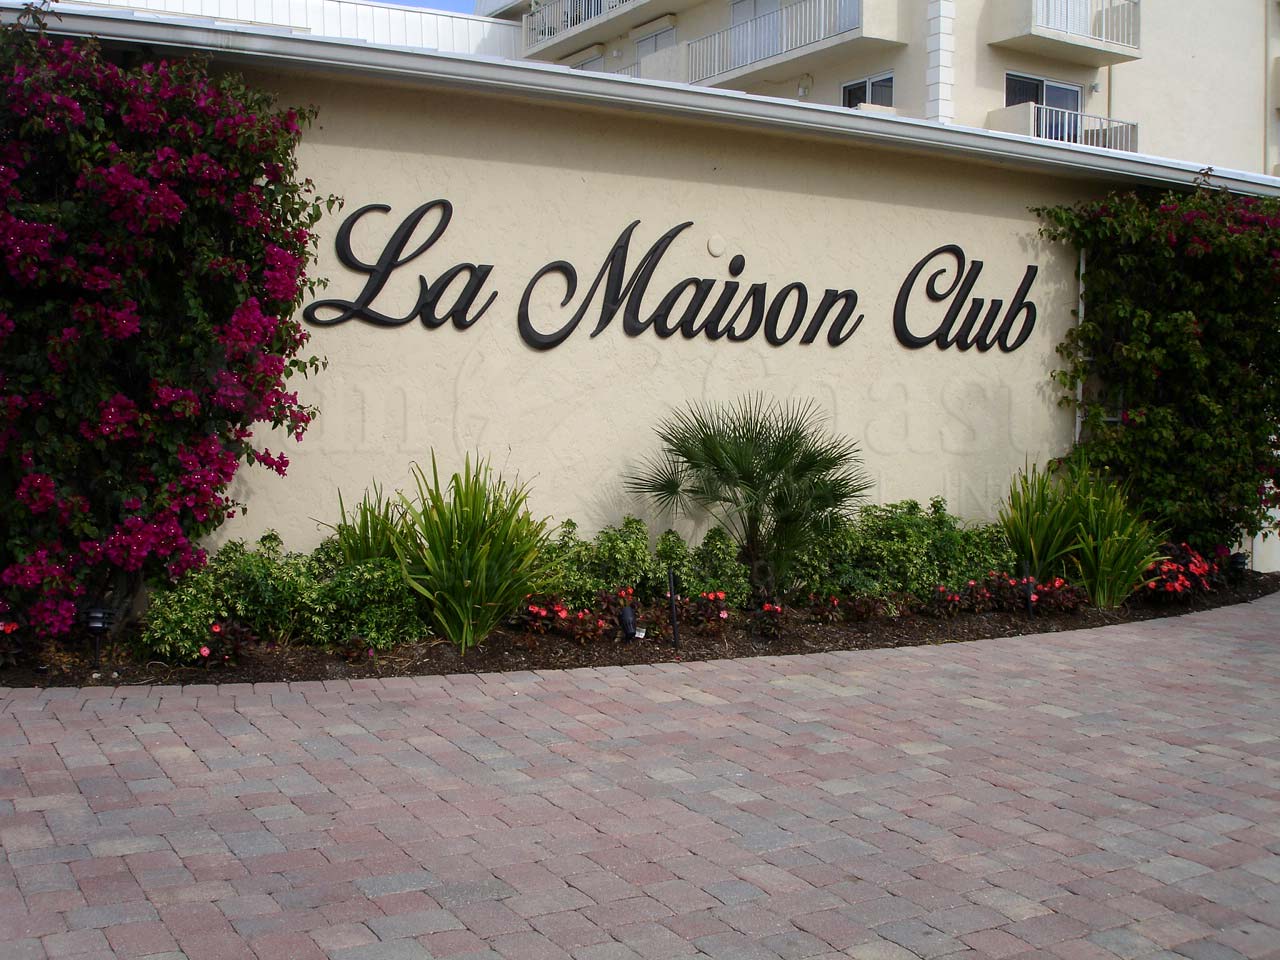 La Maison Club Signage